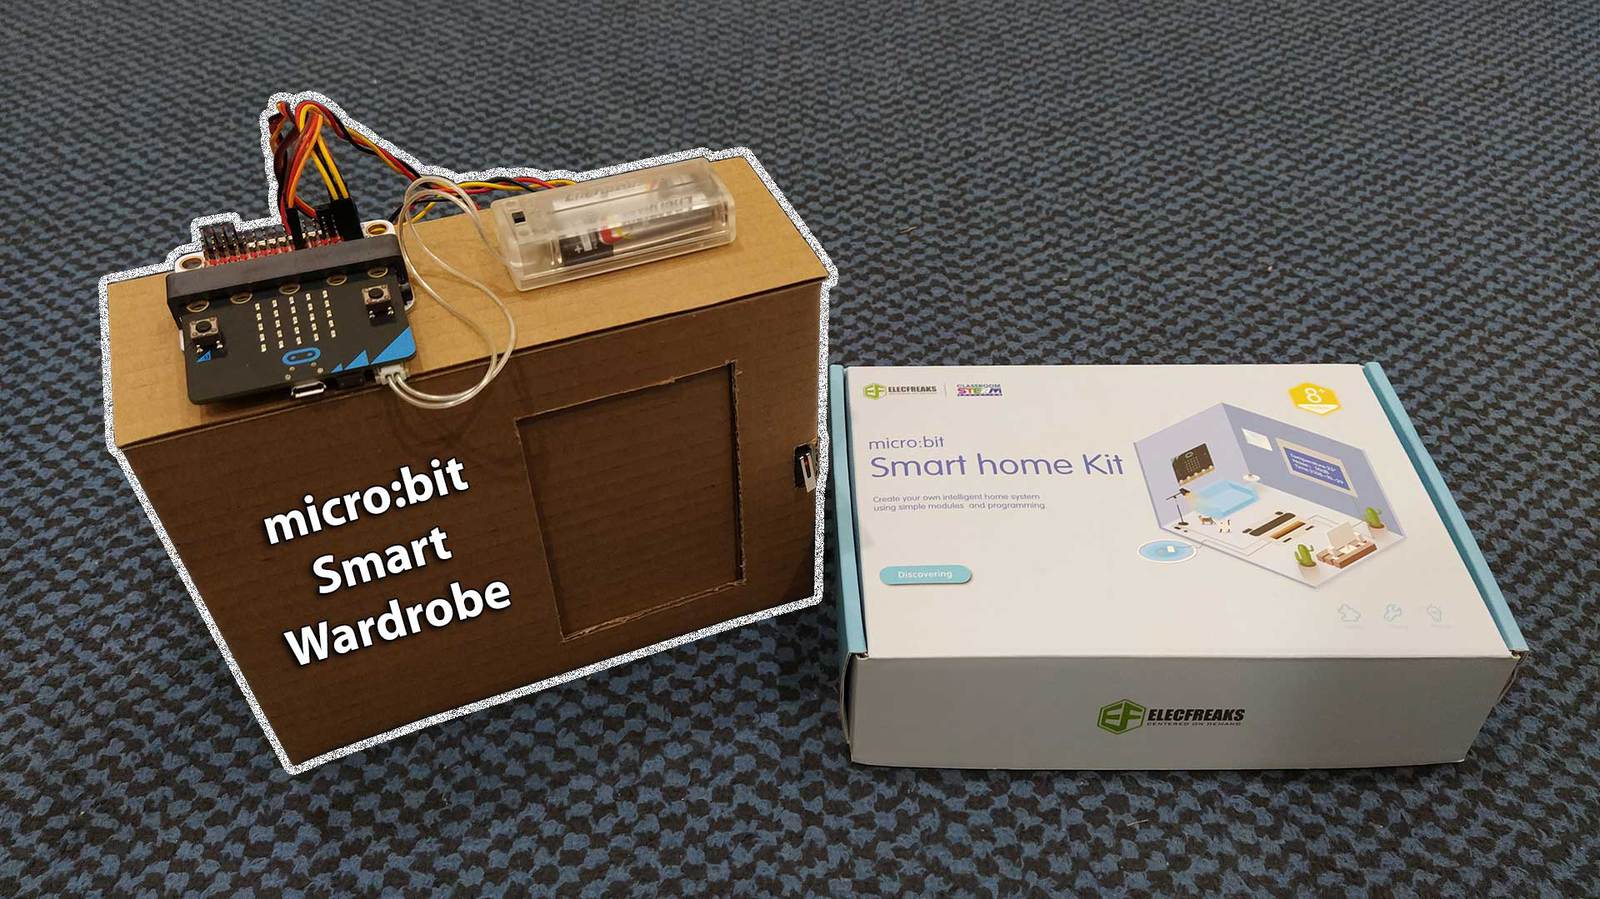 Microbit Smart Home Kit: Smart Wardrobe